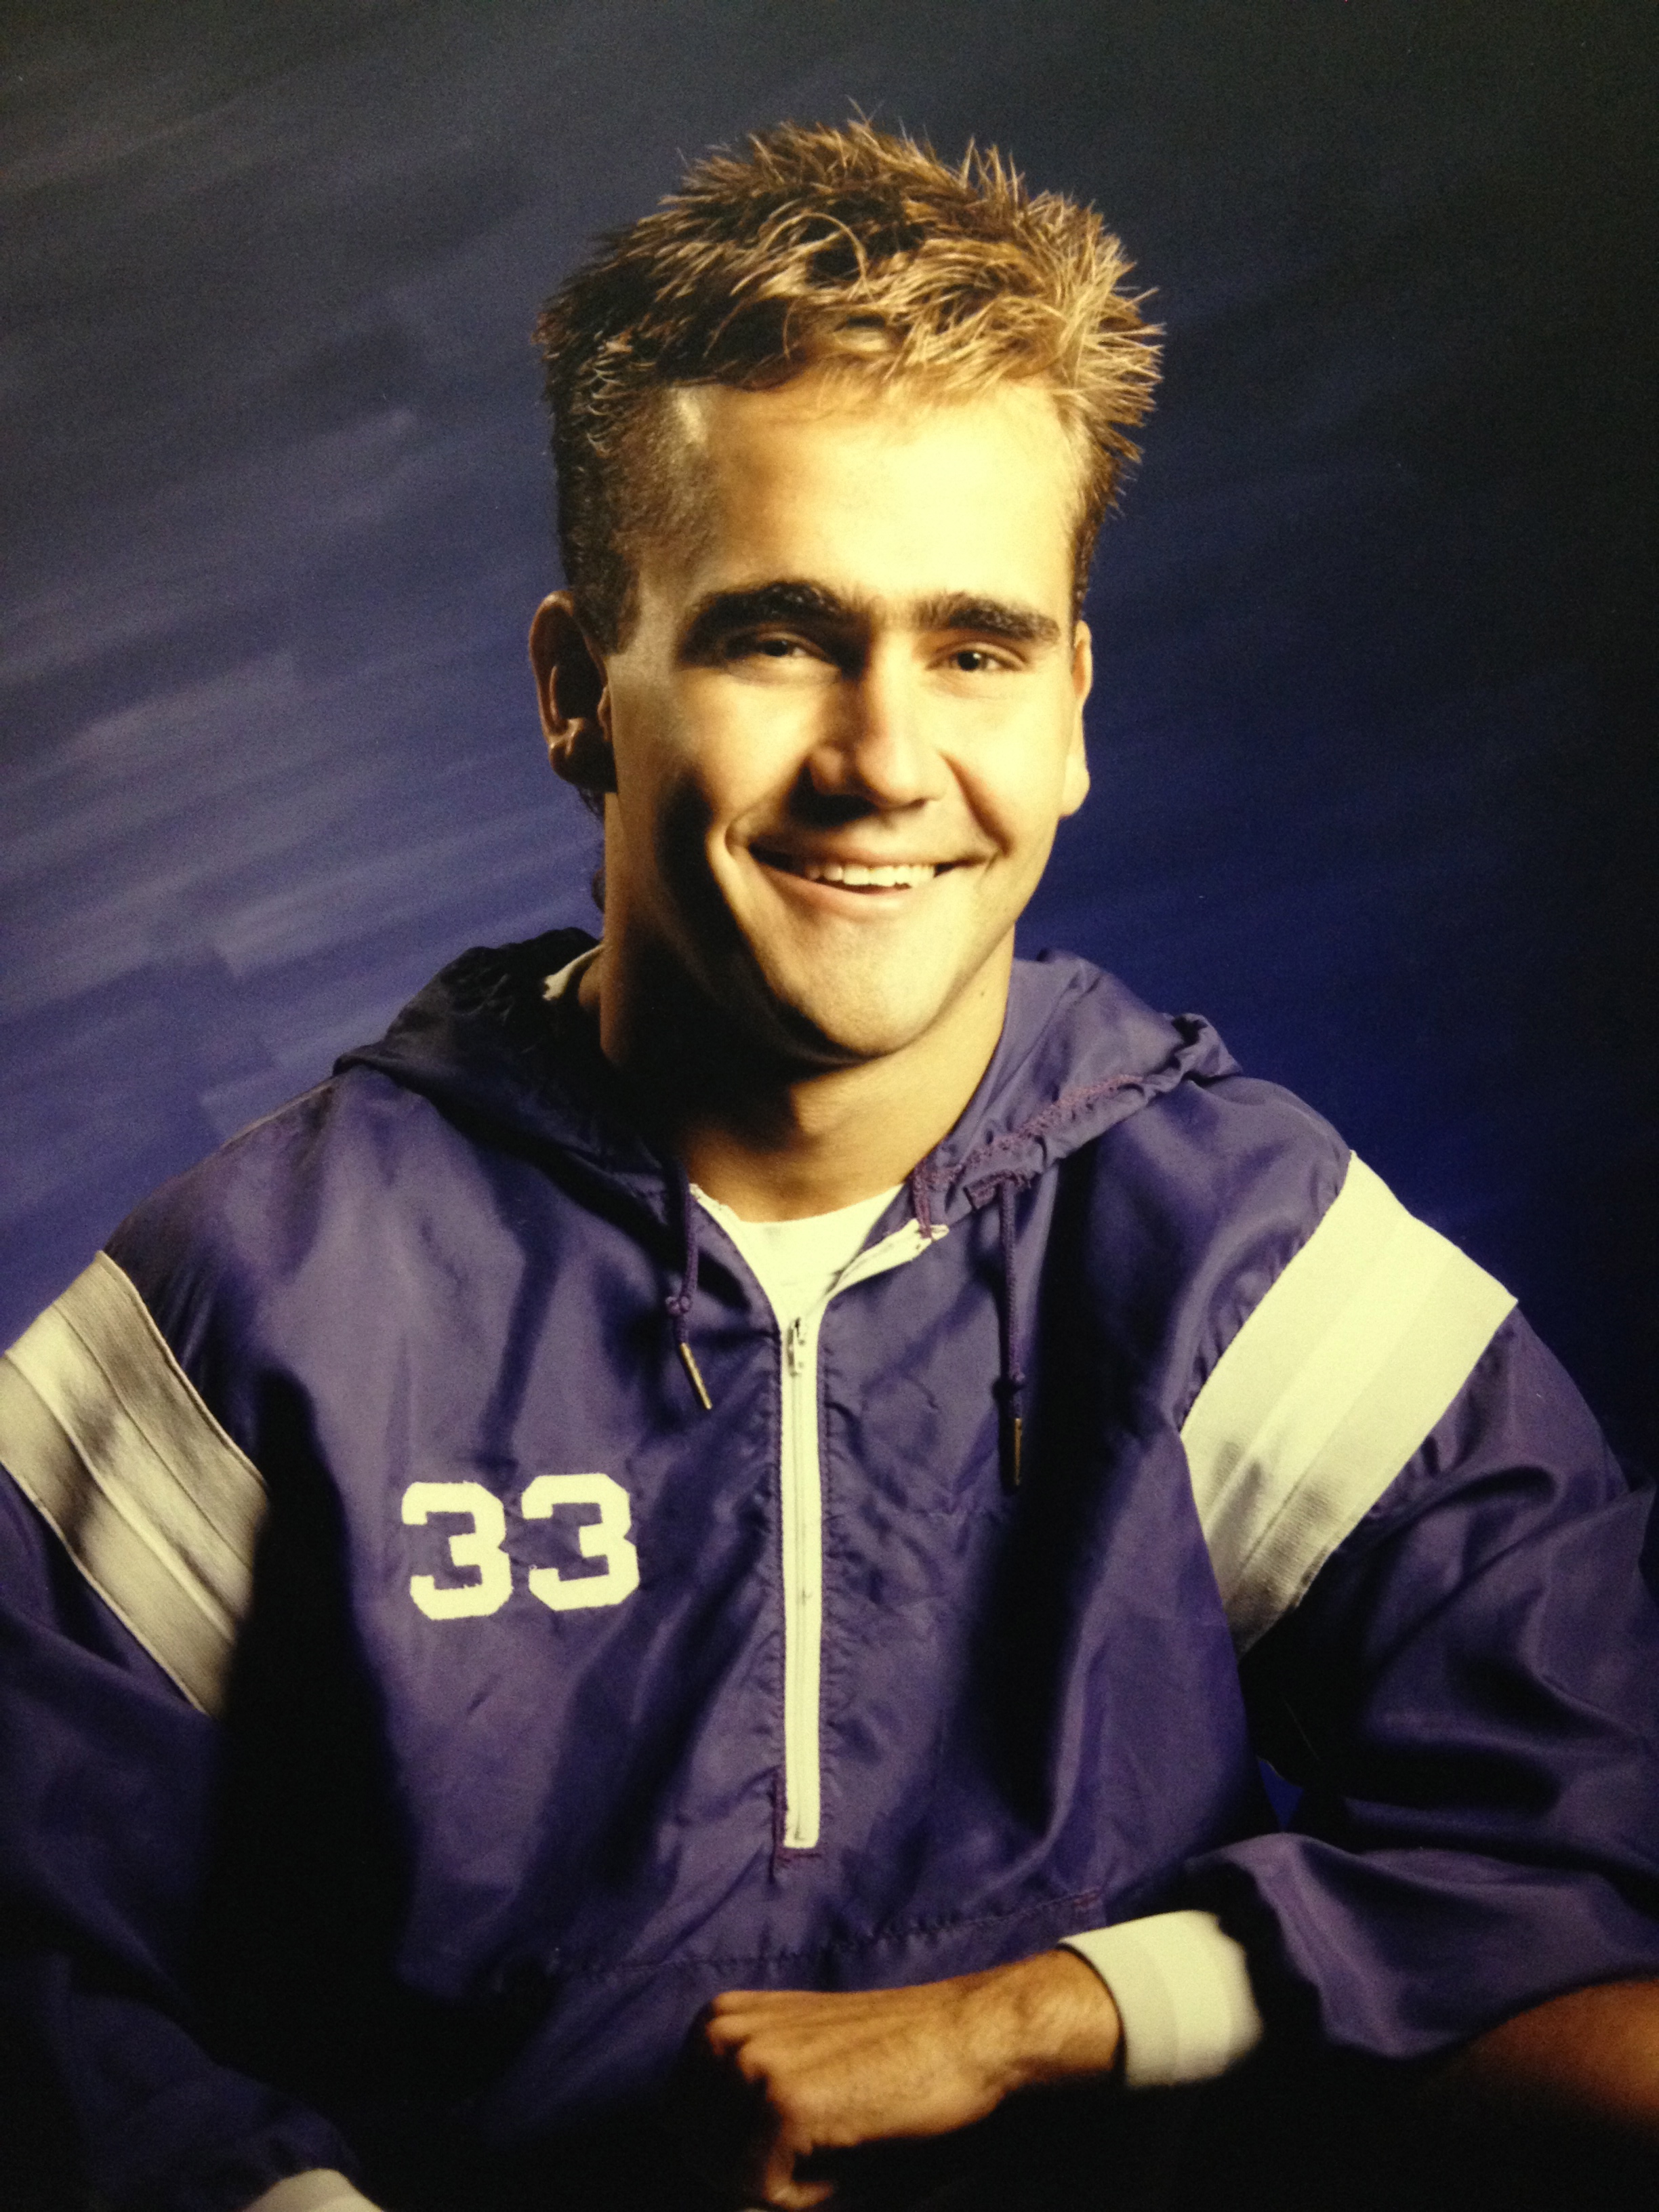   1991 STATE CHAMPION  Mike Merrick, High Jump 